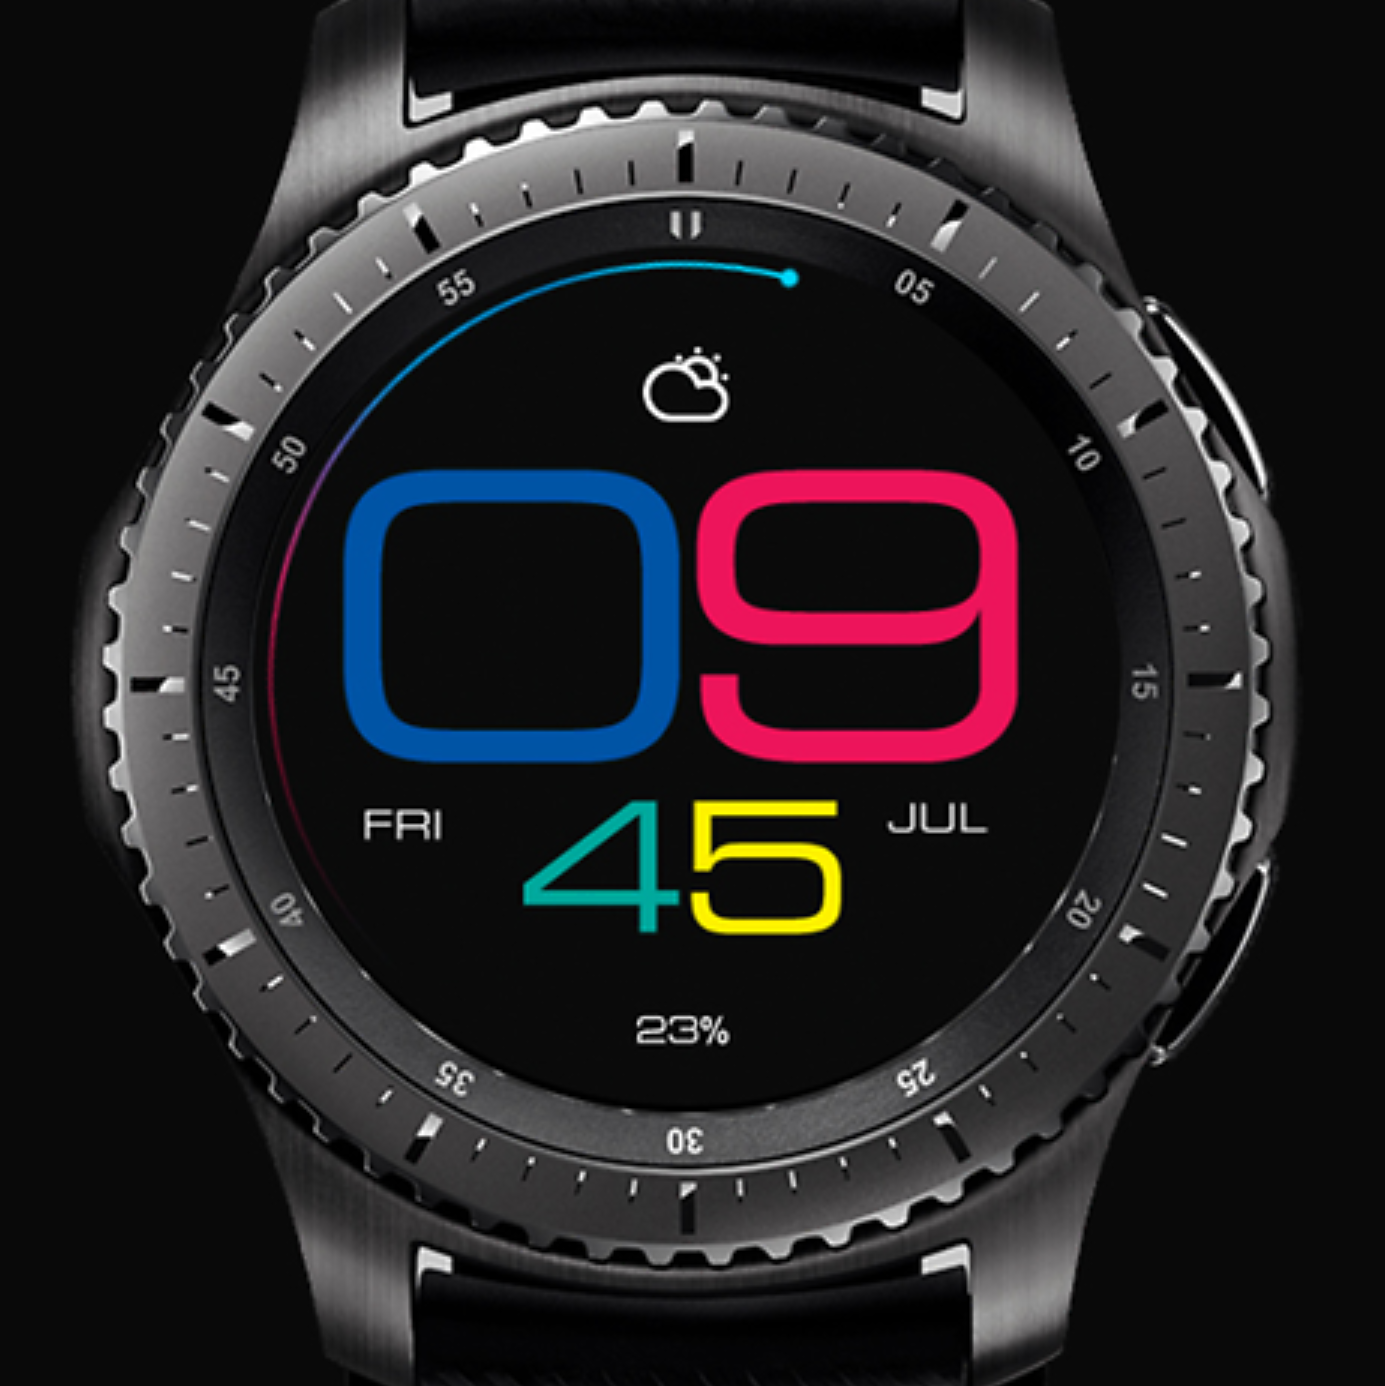 Циферблаты watch 3 pro. Циферблаты для Samsung Gear s3 Frontier. Циферблат на самсунг Гир 2. Самсунг Геар 2 циферблаты. Циферблаты для Samsung Gear s3 Лукойл.